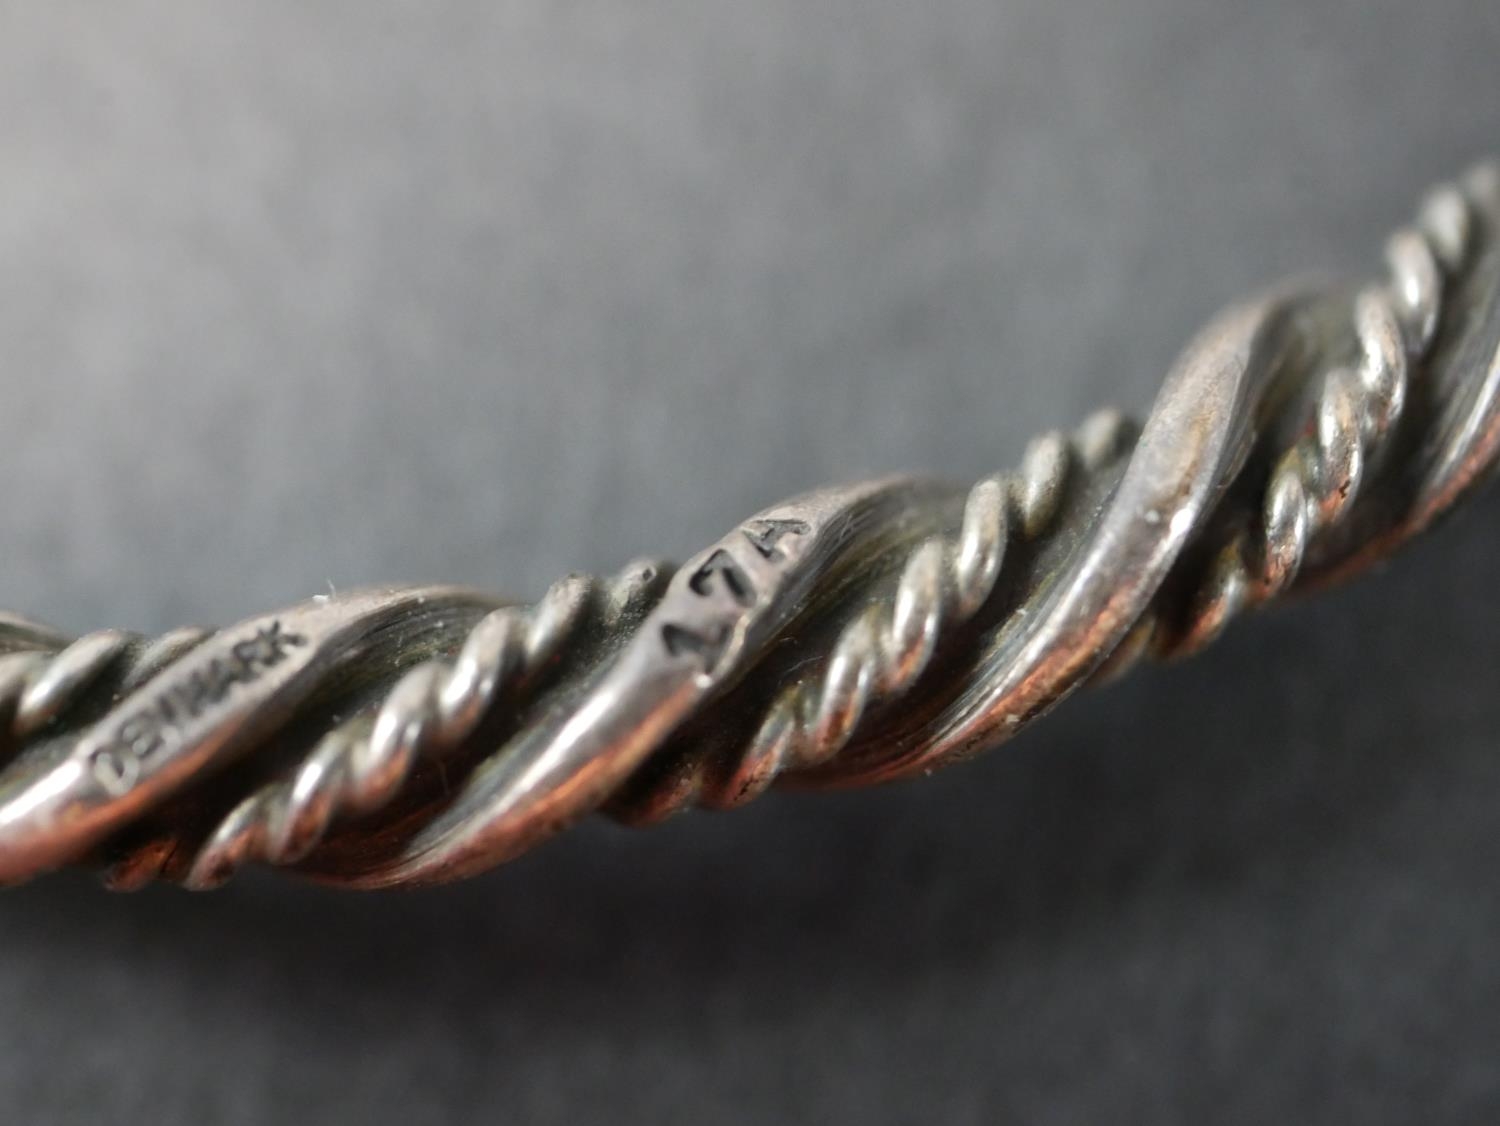 A Georg Jensen silver rope twist bangle, design no. 17B, George Jensen oval mark. - Image 5 of 7